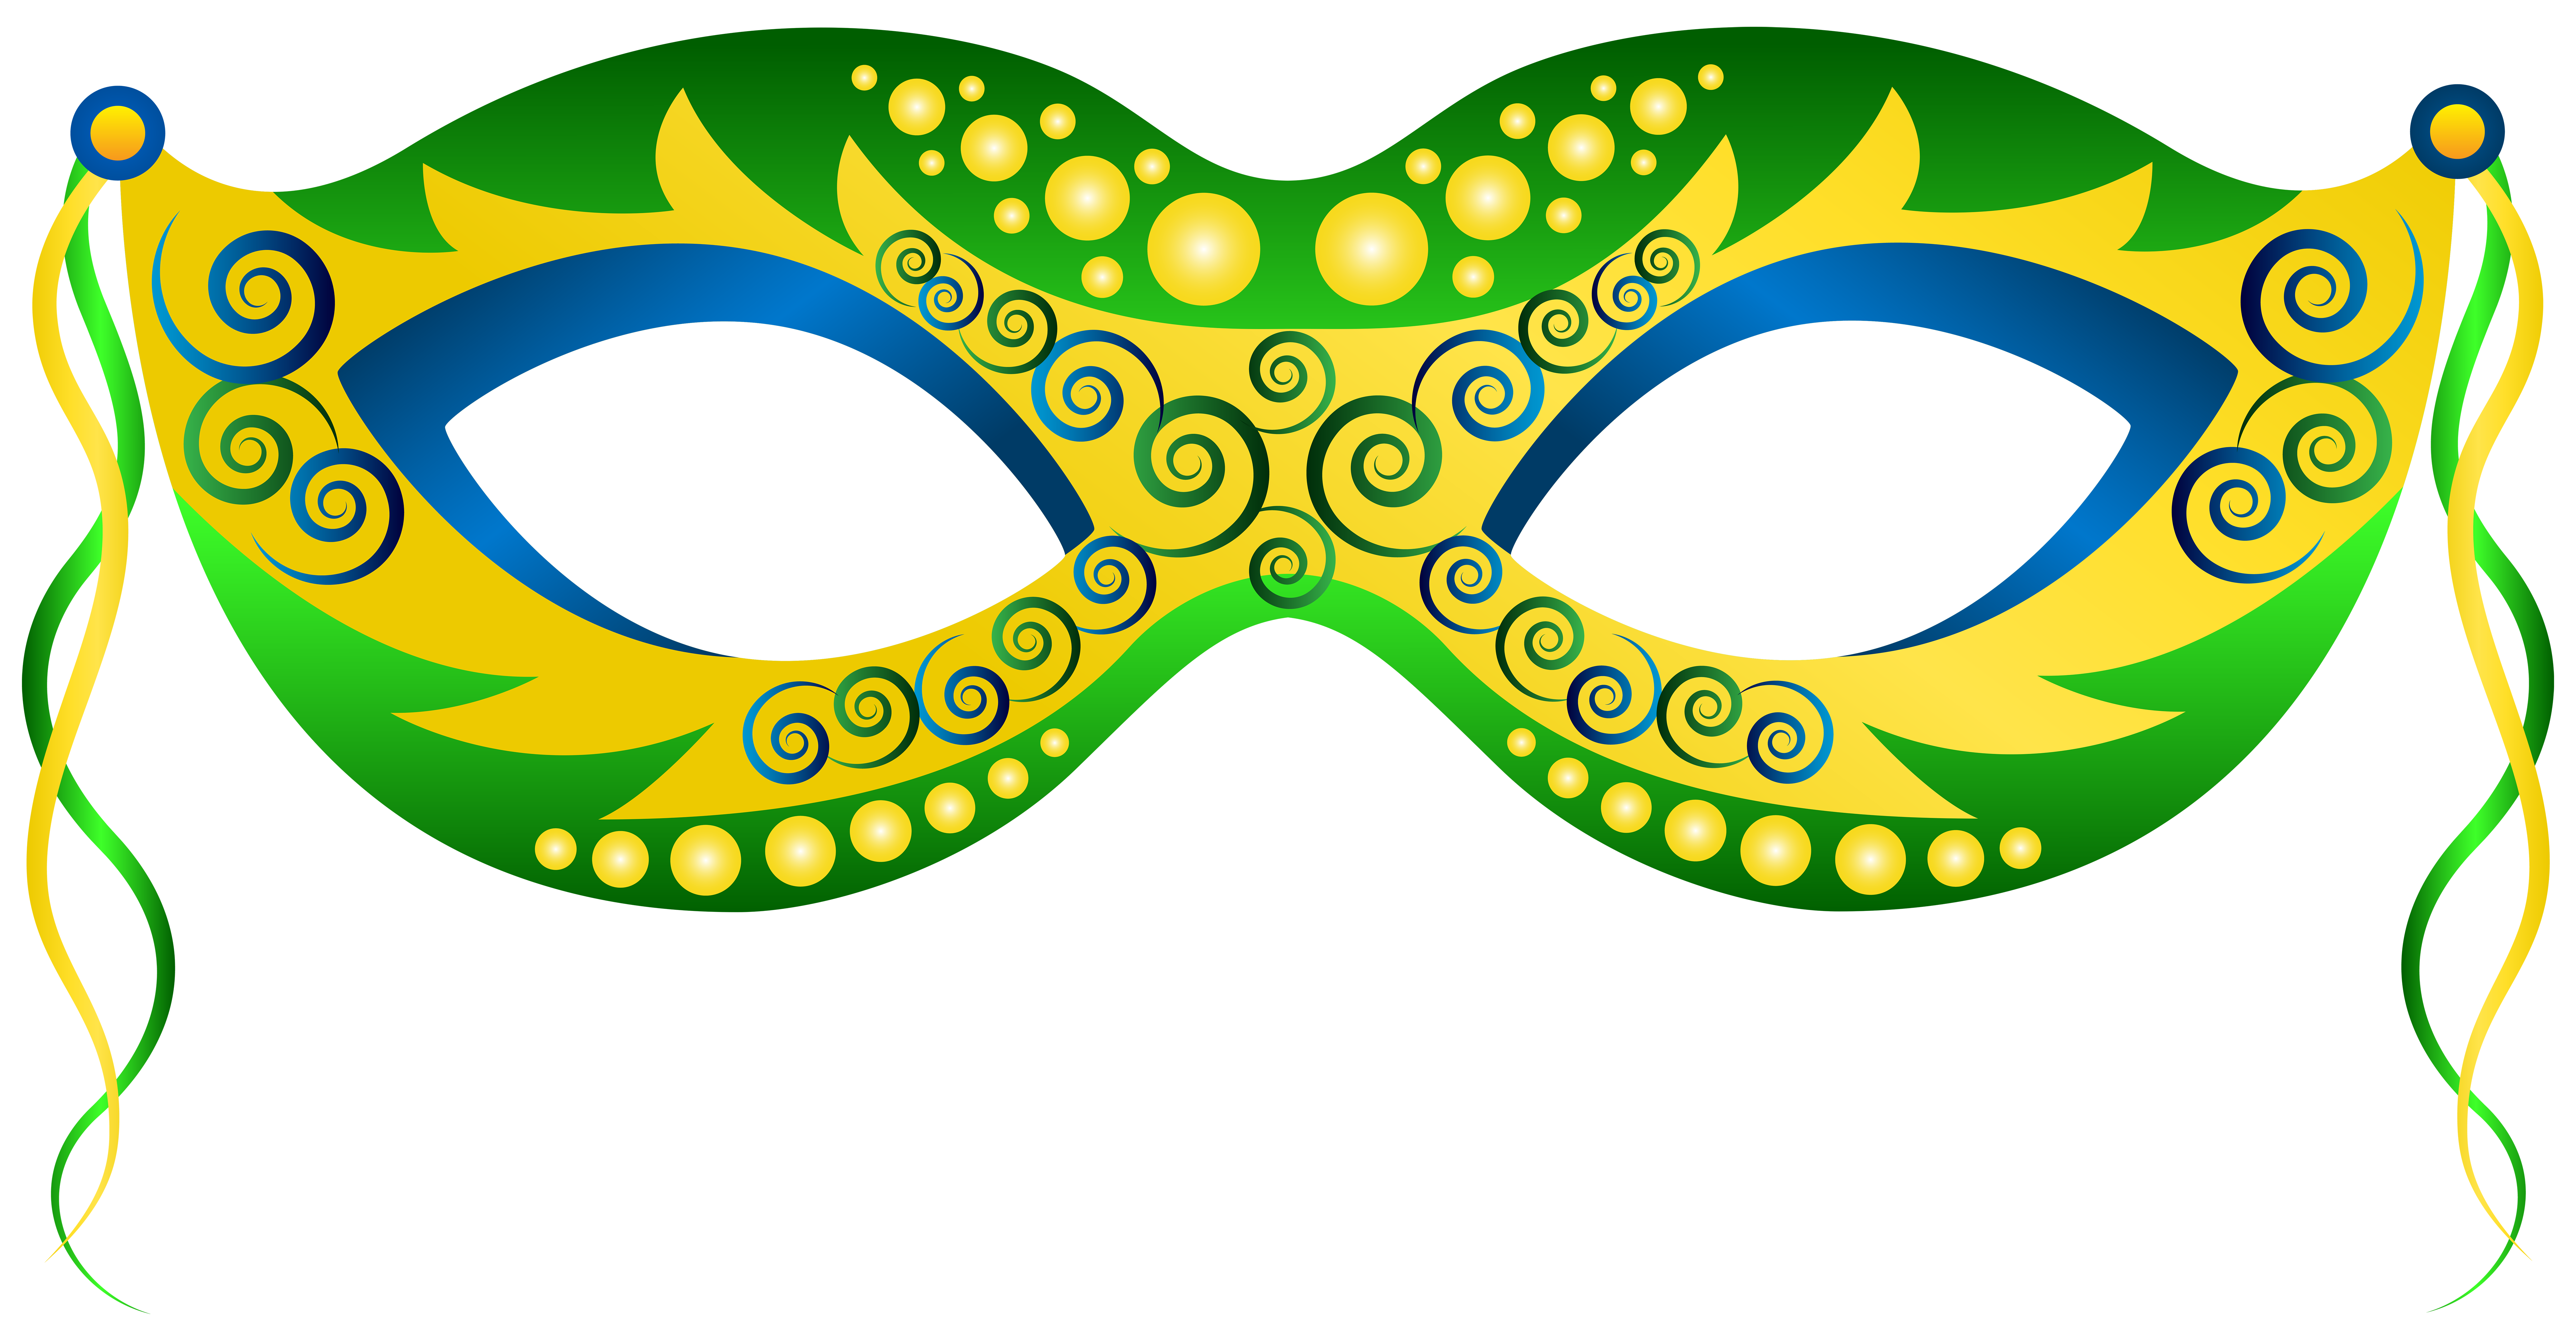 Free Masquerade Mask Cliparts, Download Free Masquerade Mask Cliparts